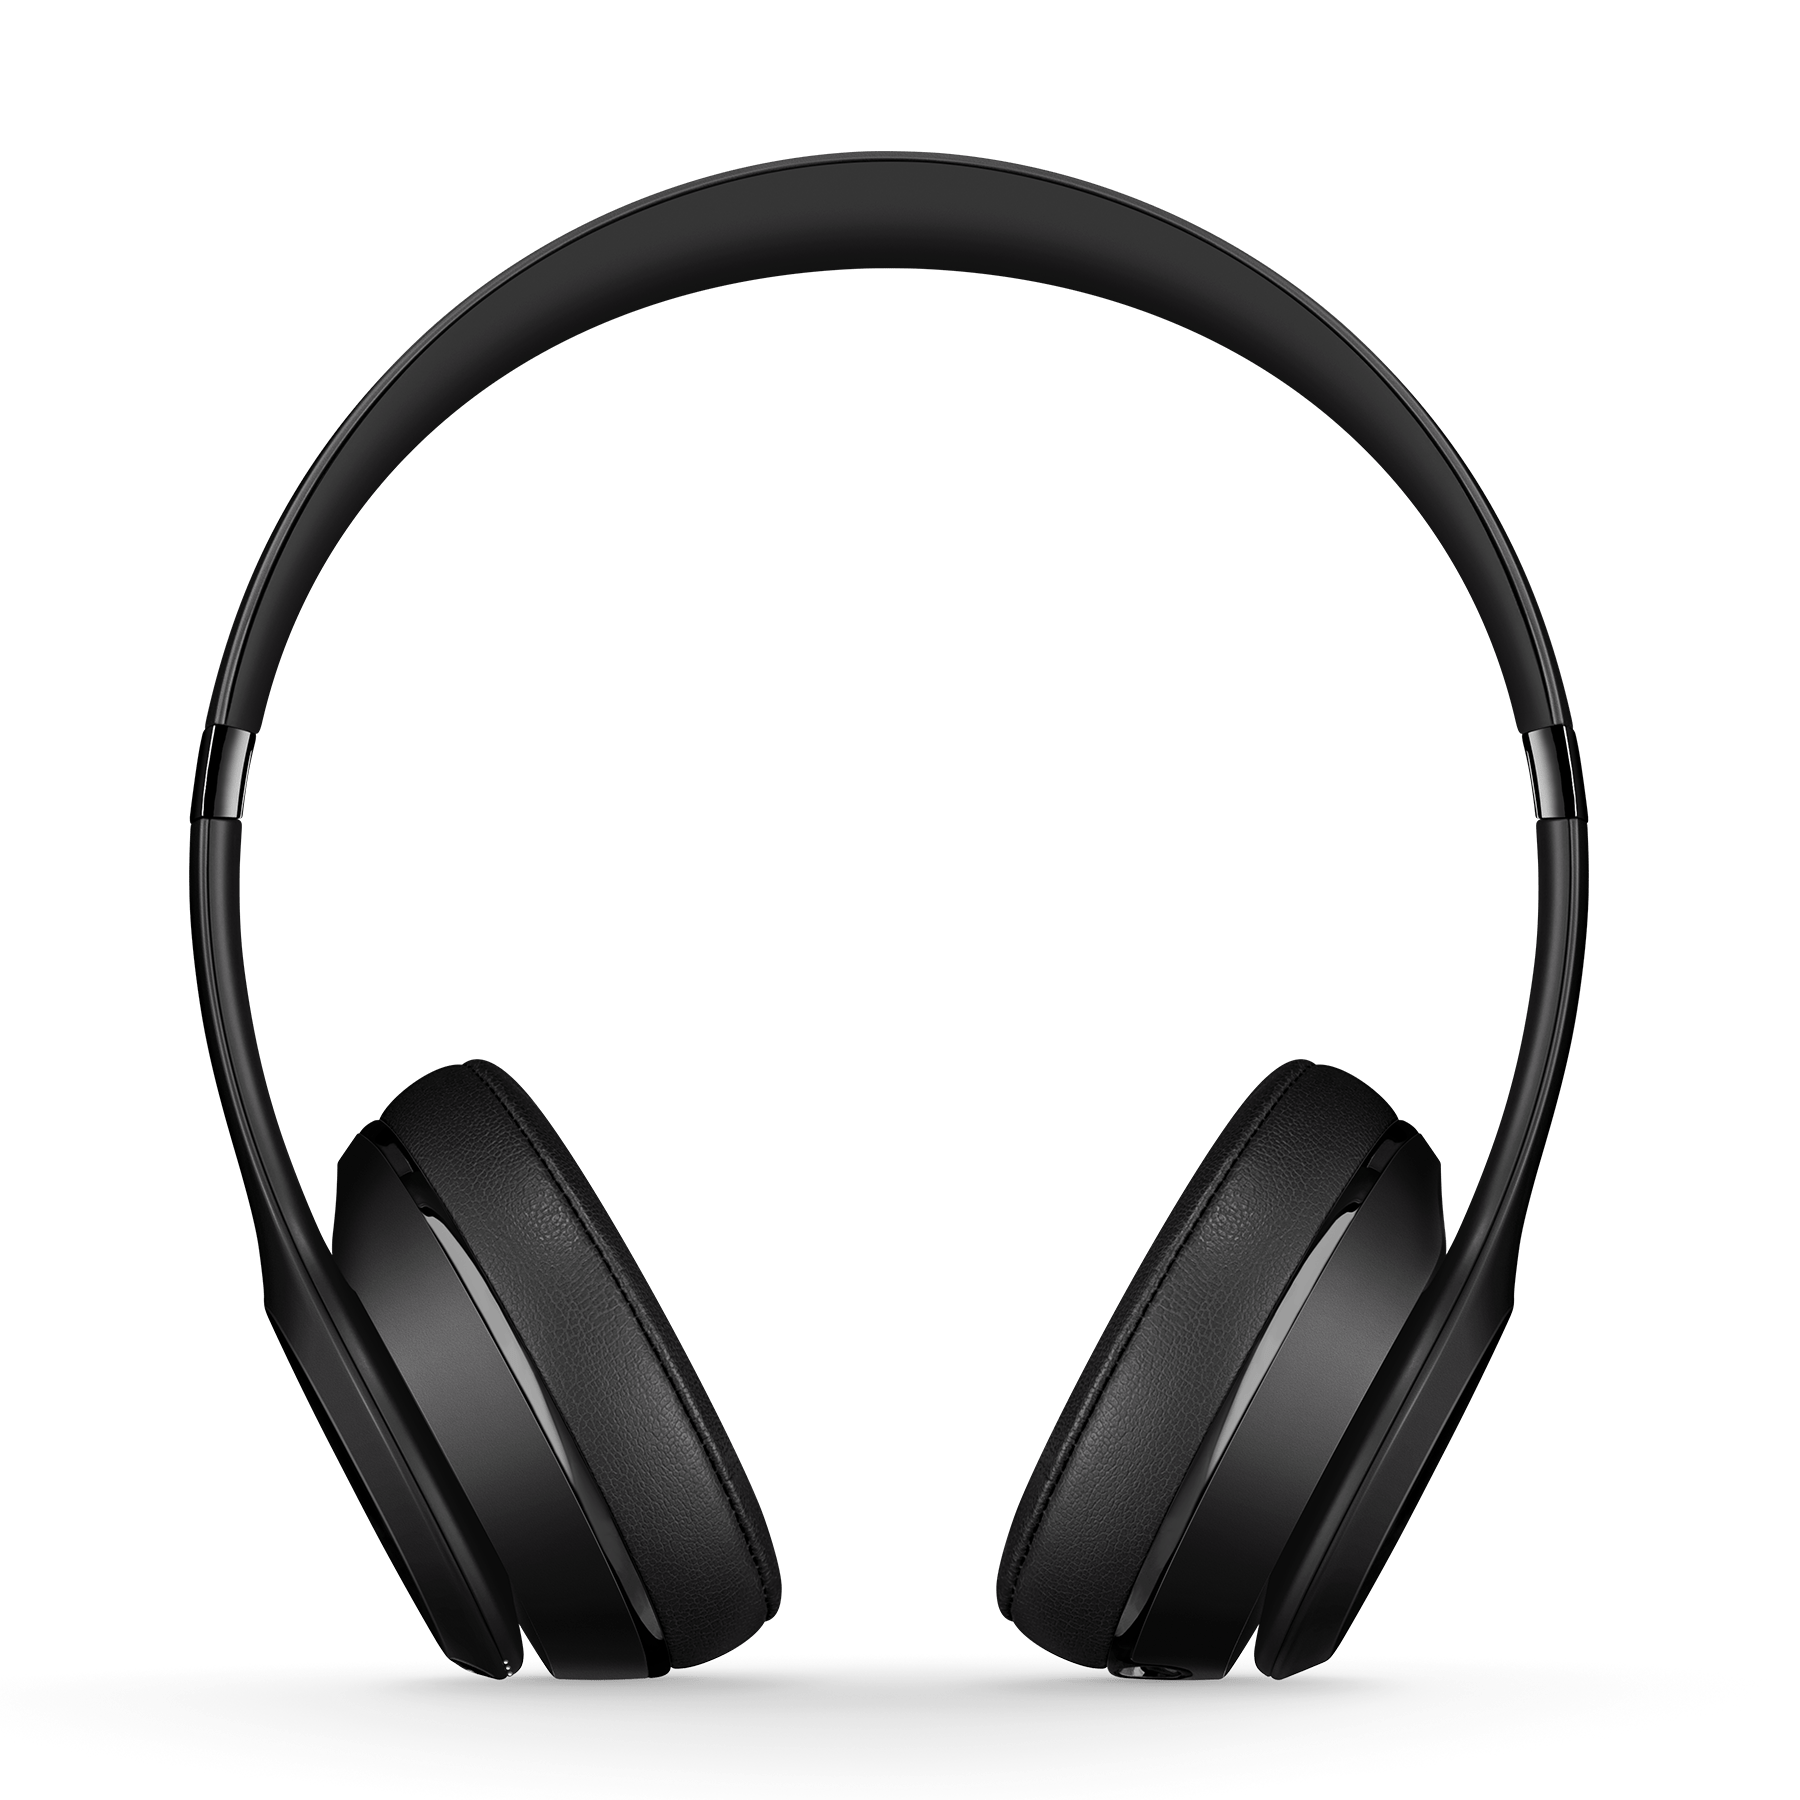 Black Beats Headphone PNG Free Download